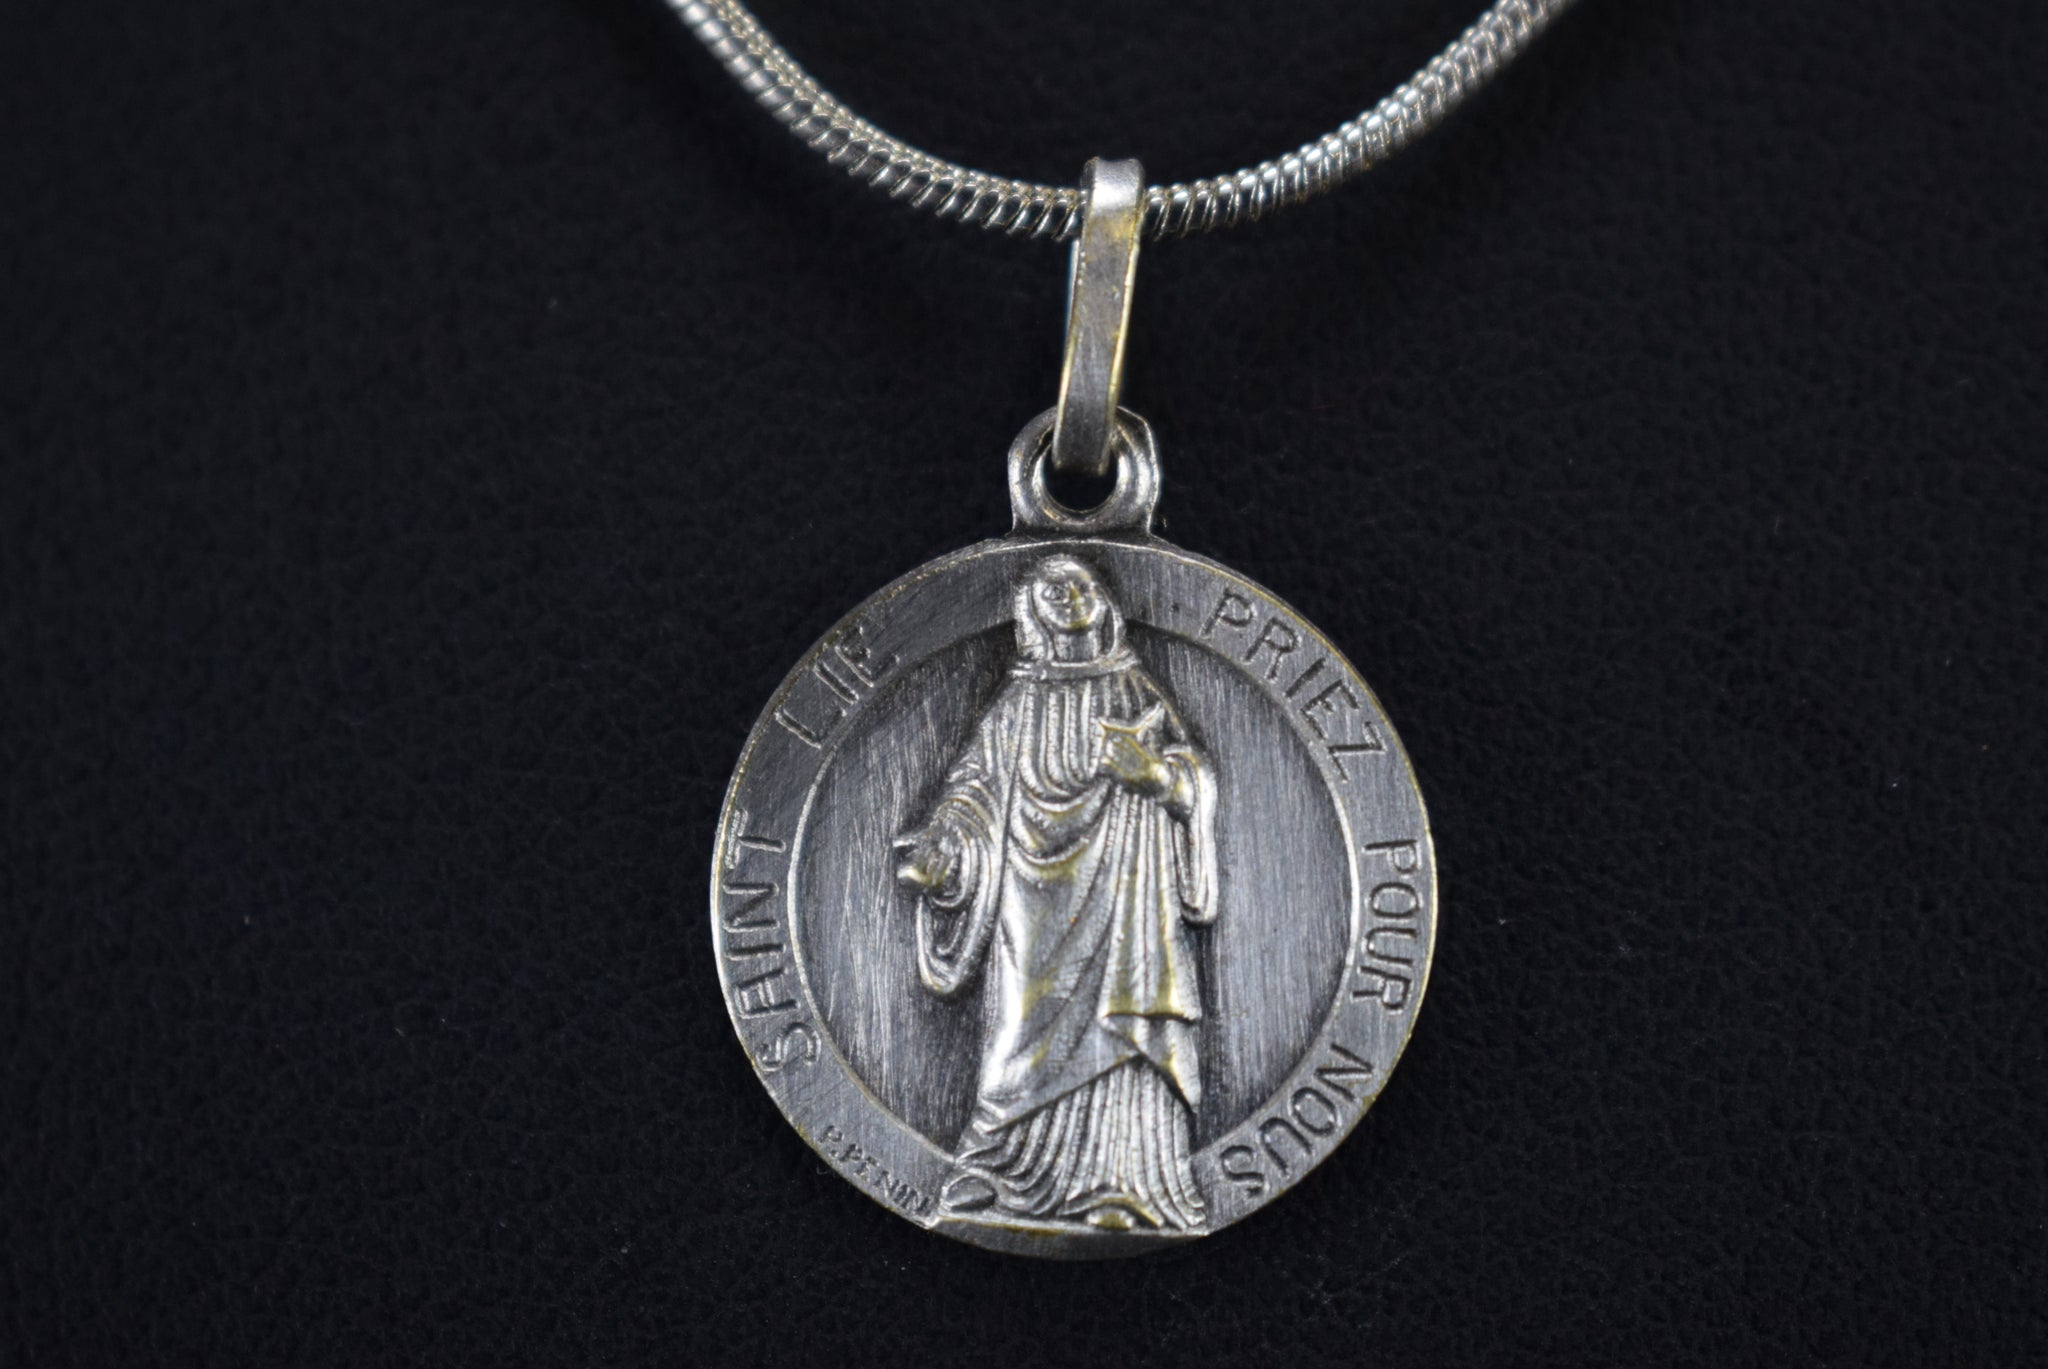 St Lie Medal by Penin - Charmantiques